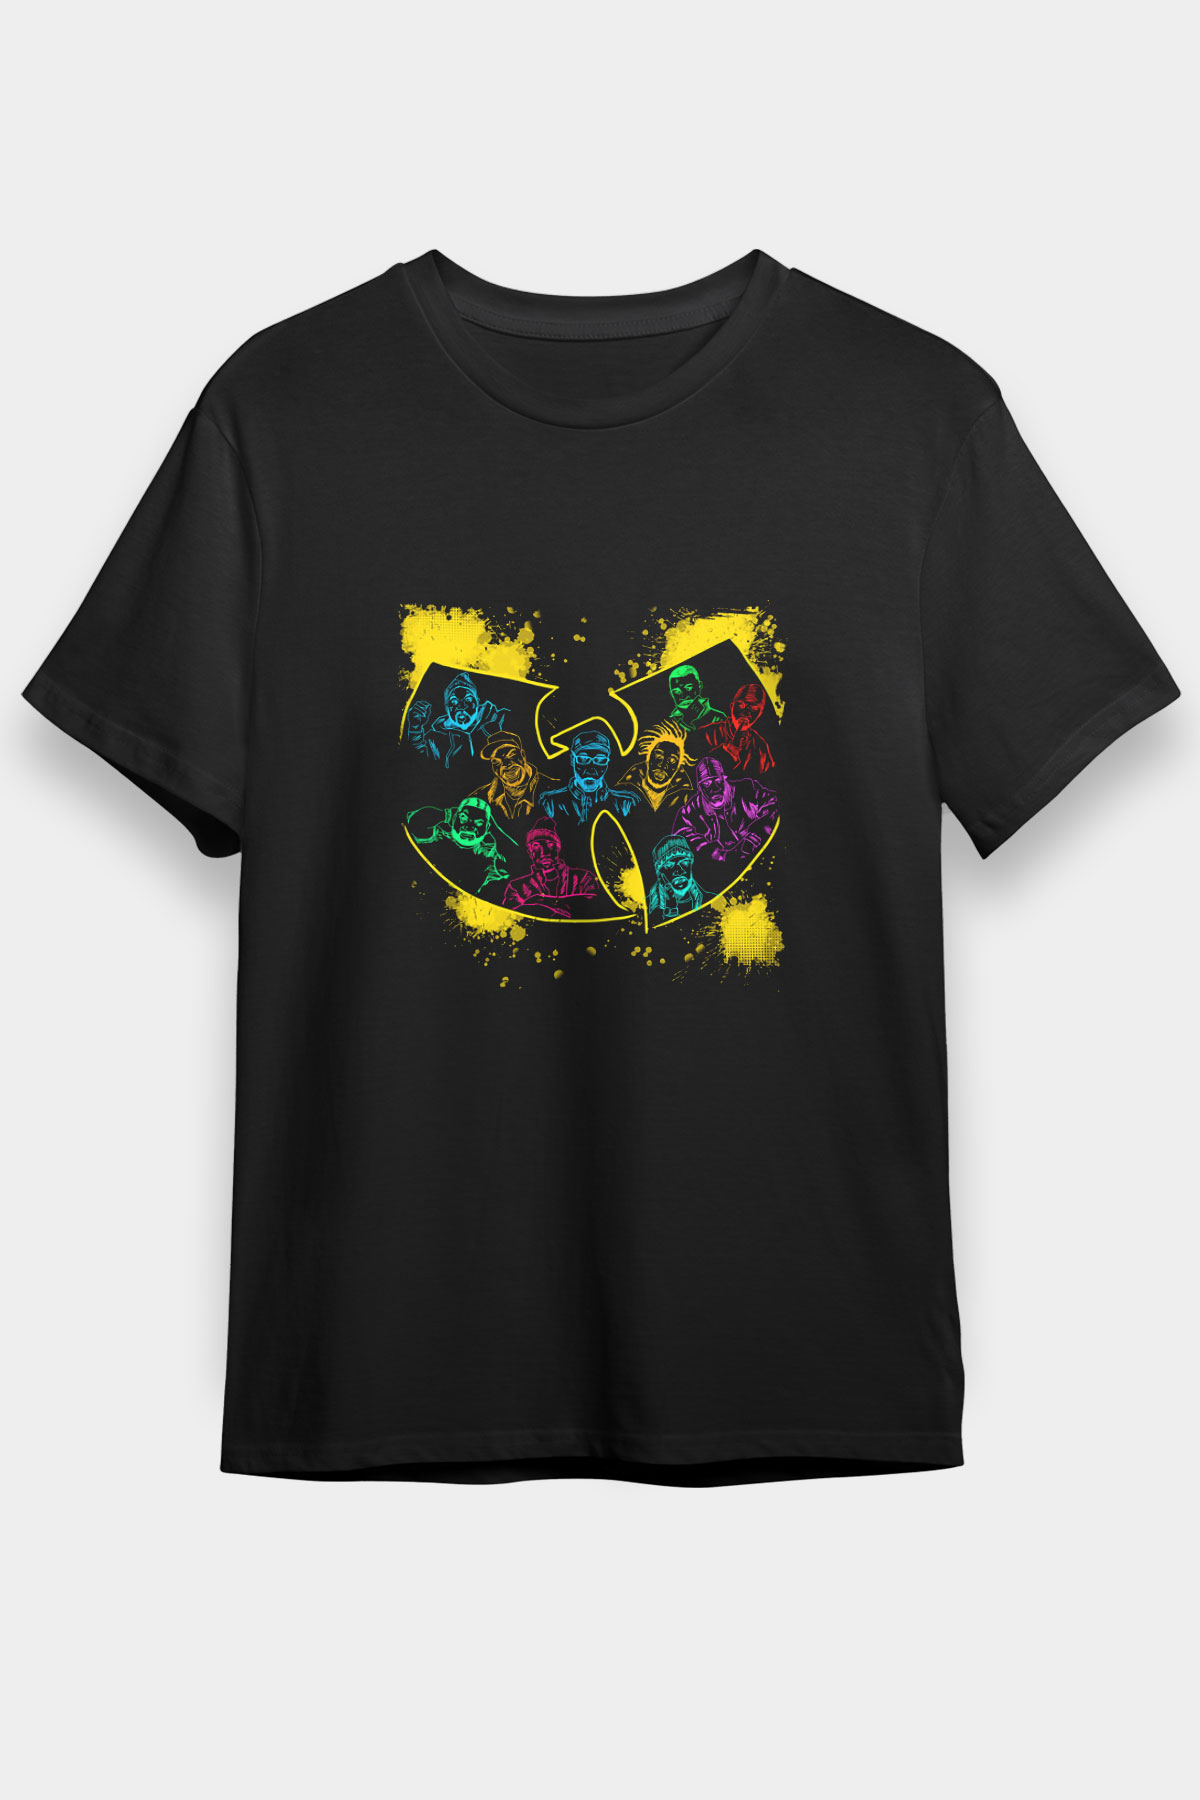 Wu-Tang Clan T shirt,Hip Hop,Rap Tshirt 04/